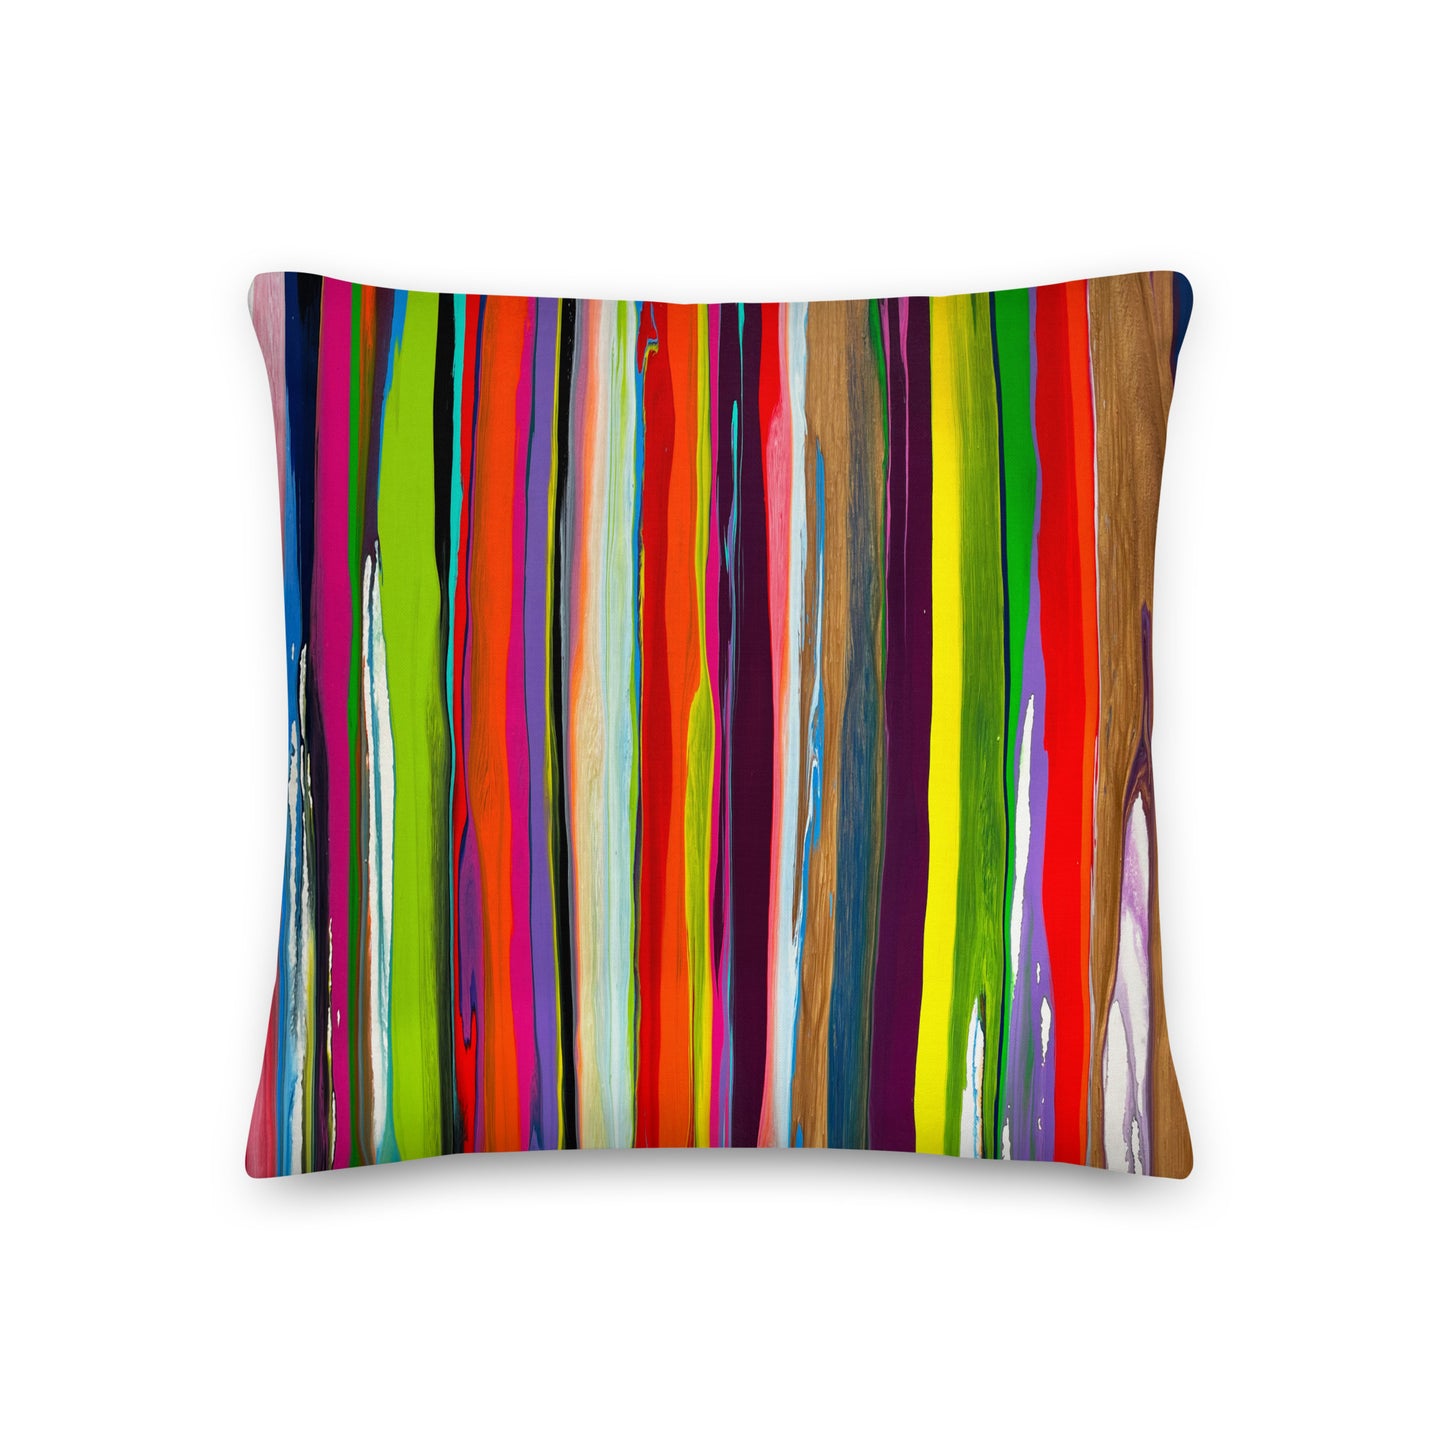 Premium Pillow - Vertical Stripes